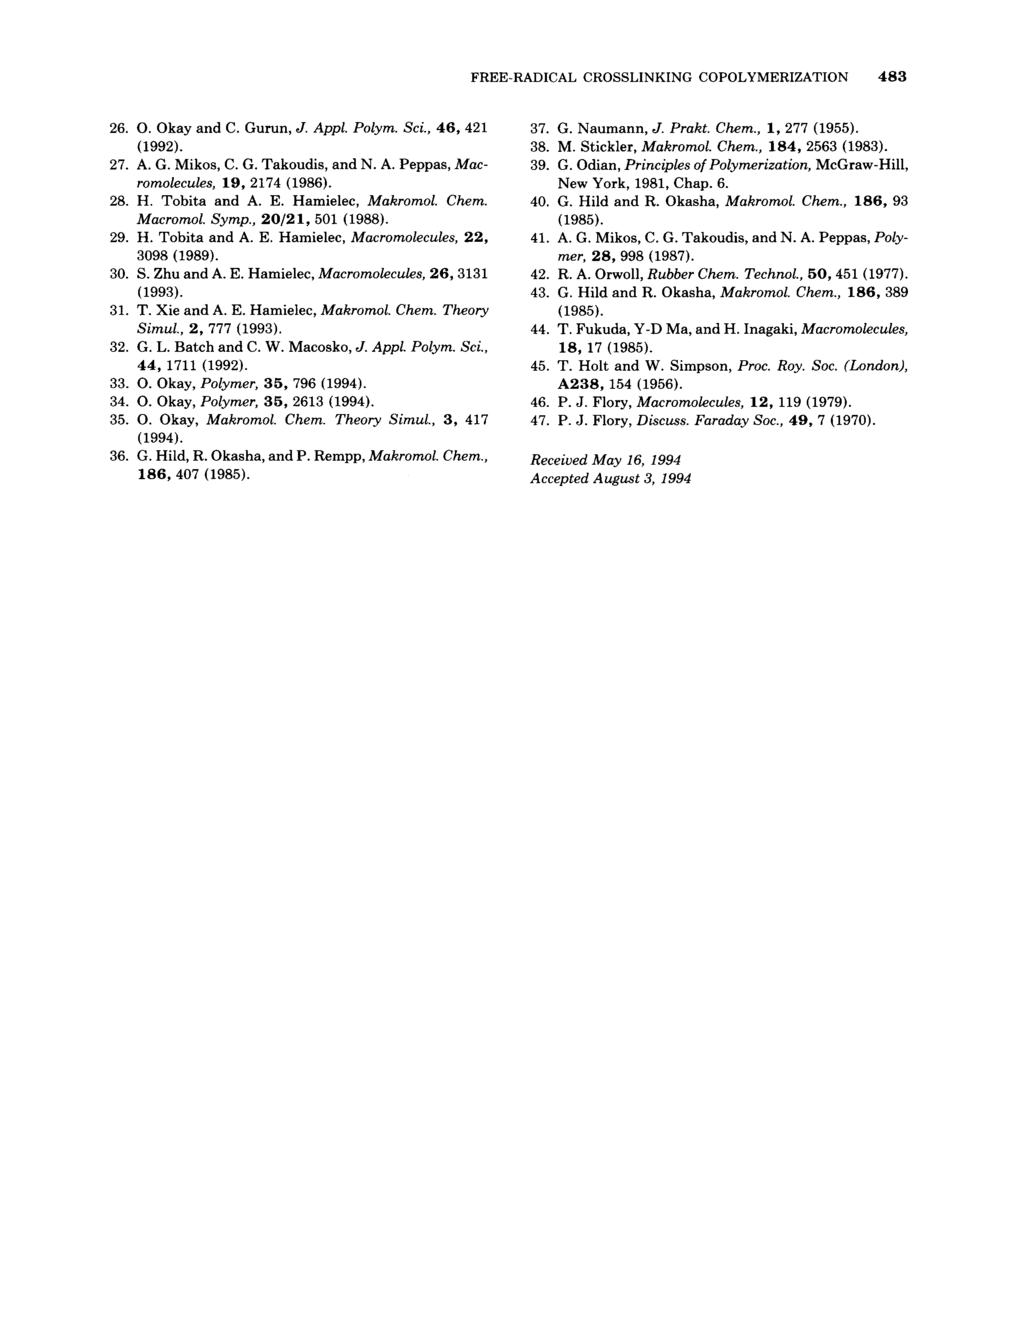 FREE-RADICAL CROSSLINKING COPOLYMERIZATION 483 26. 0. Okay and C. Gurun, J. Appl. Polym. Sci., 46,421 (1992). 27. A. G. Mikos, C. G. Takoudis, and N. A. Peppas, Macromolecules, 19, 2174 (1986). 28. H.